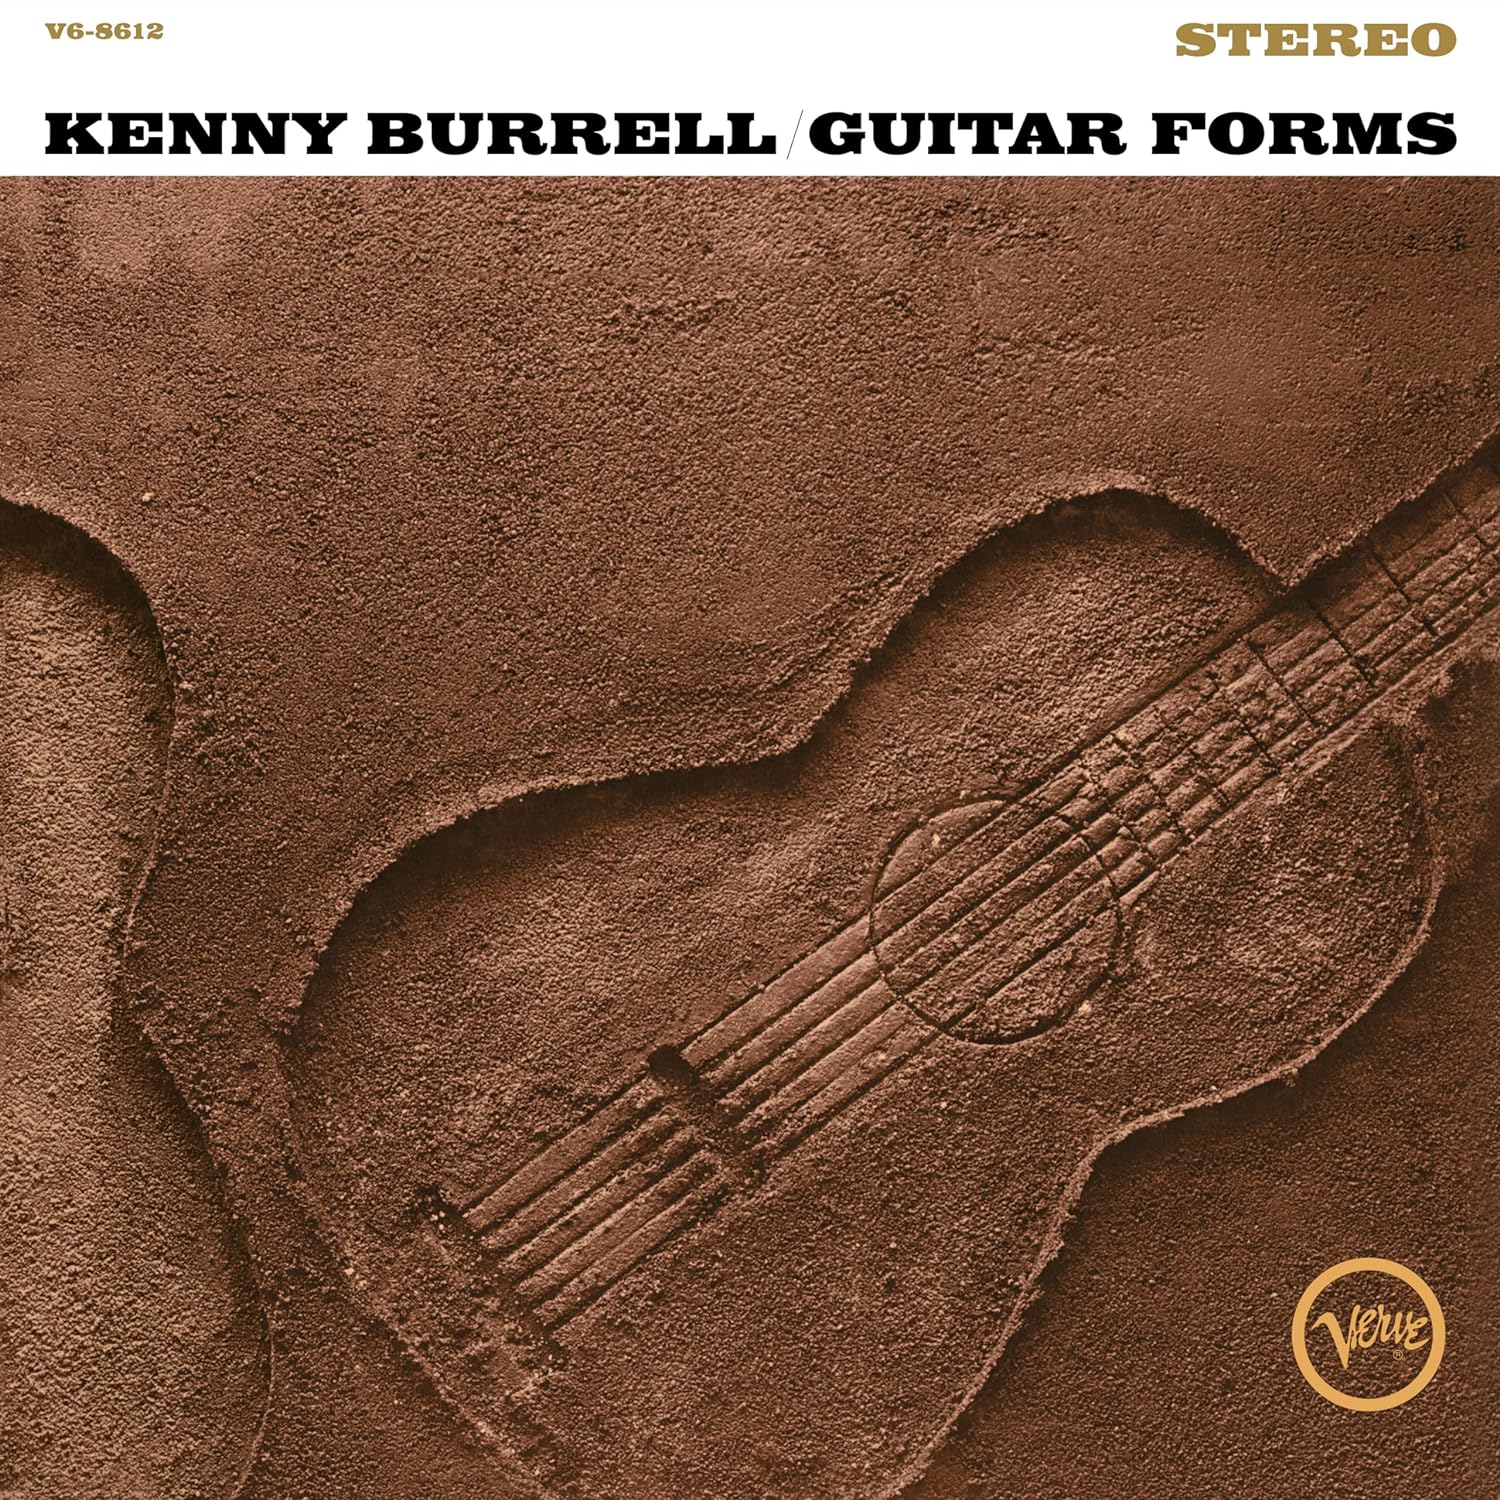 BURELL KENNY – GUITAR FORMS acoustic sounds series LP